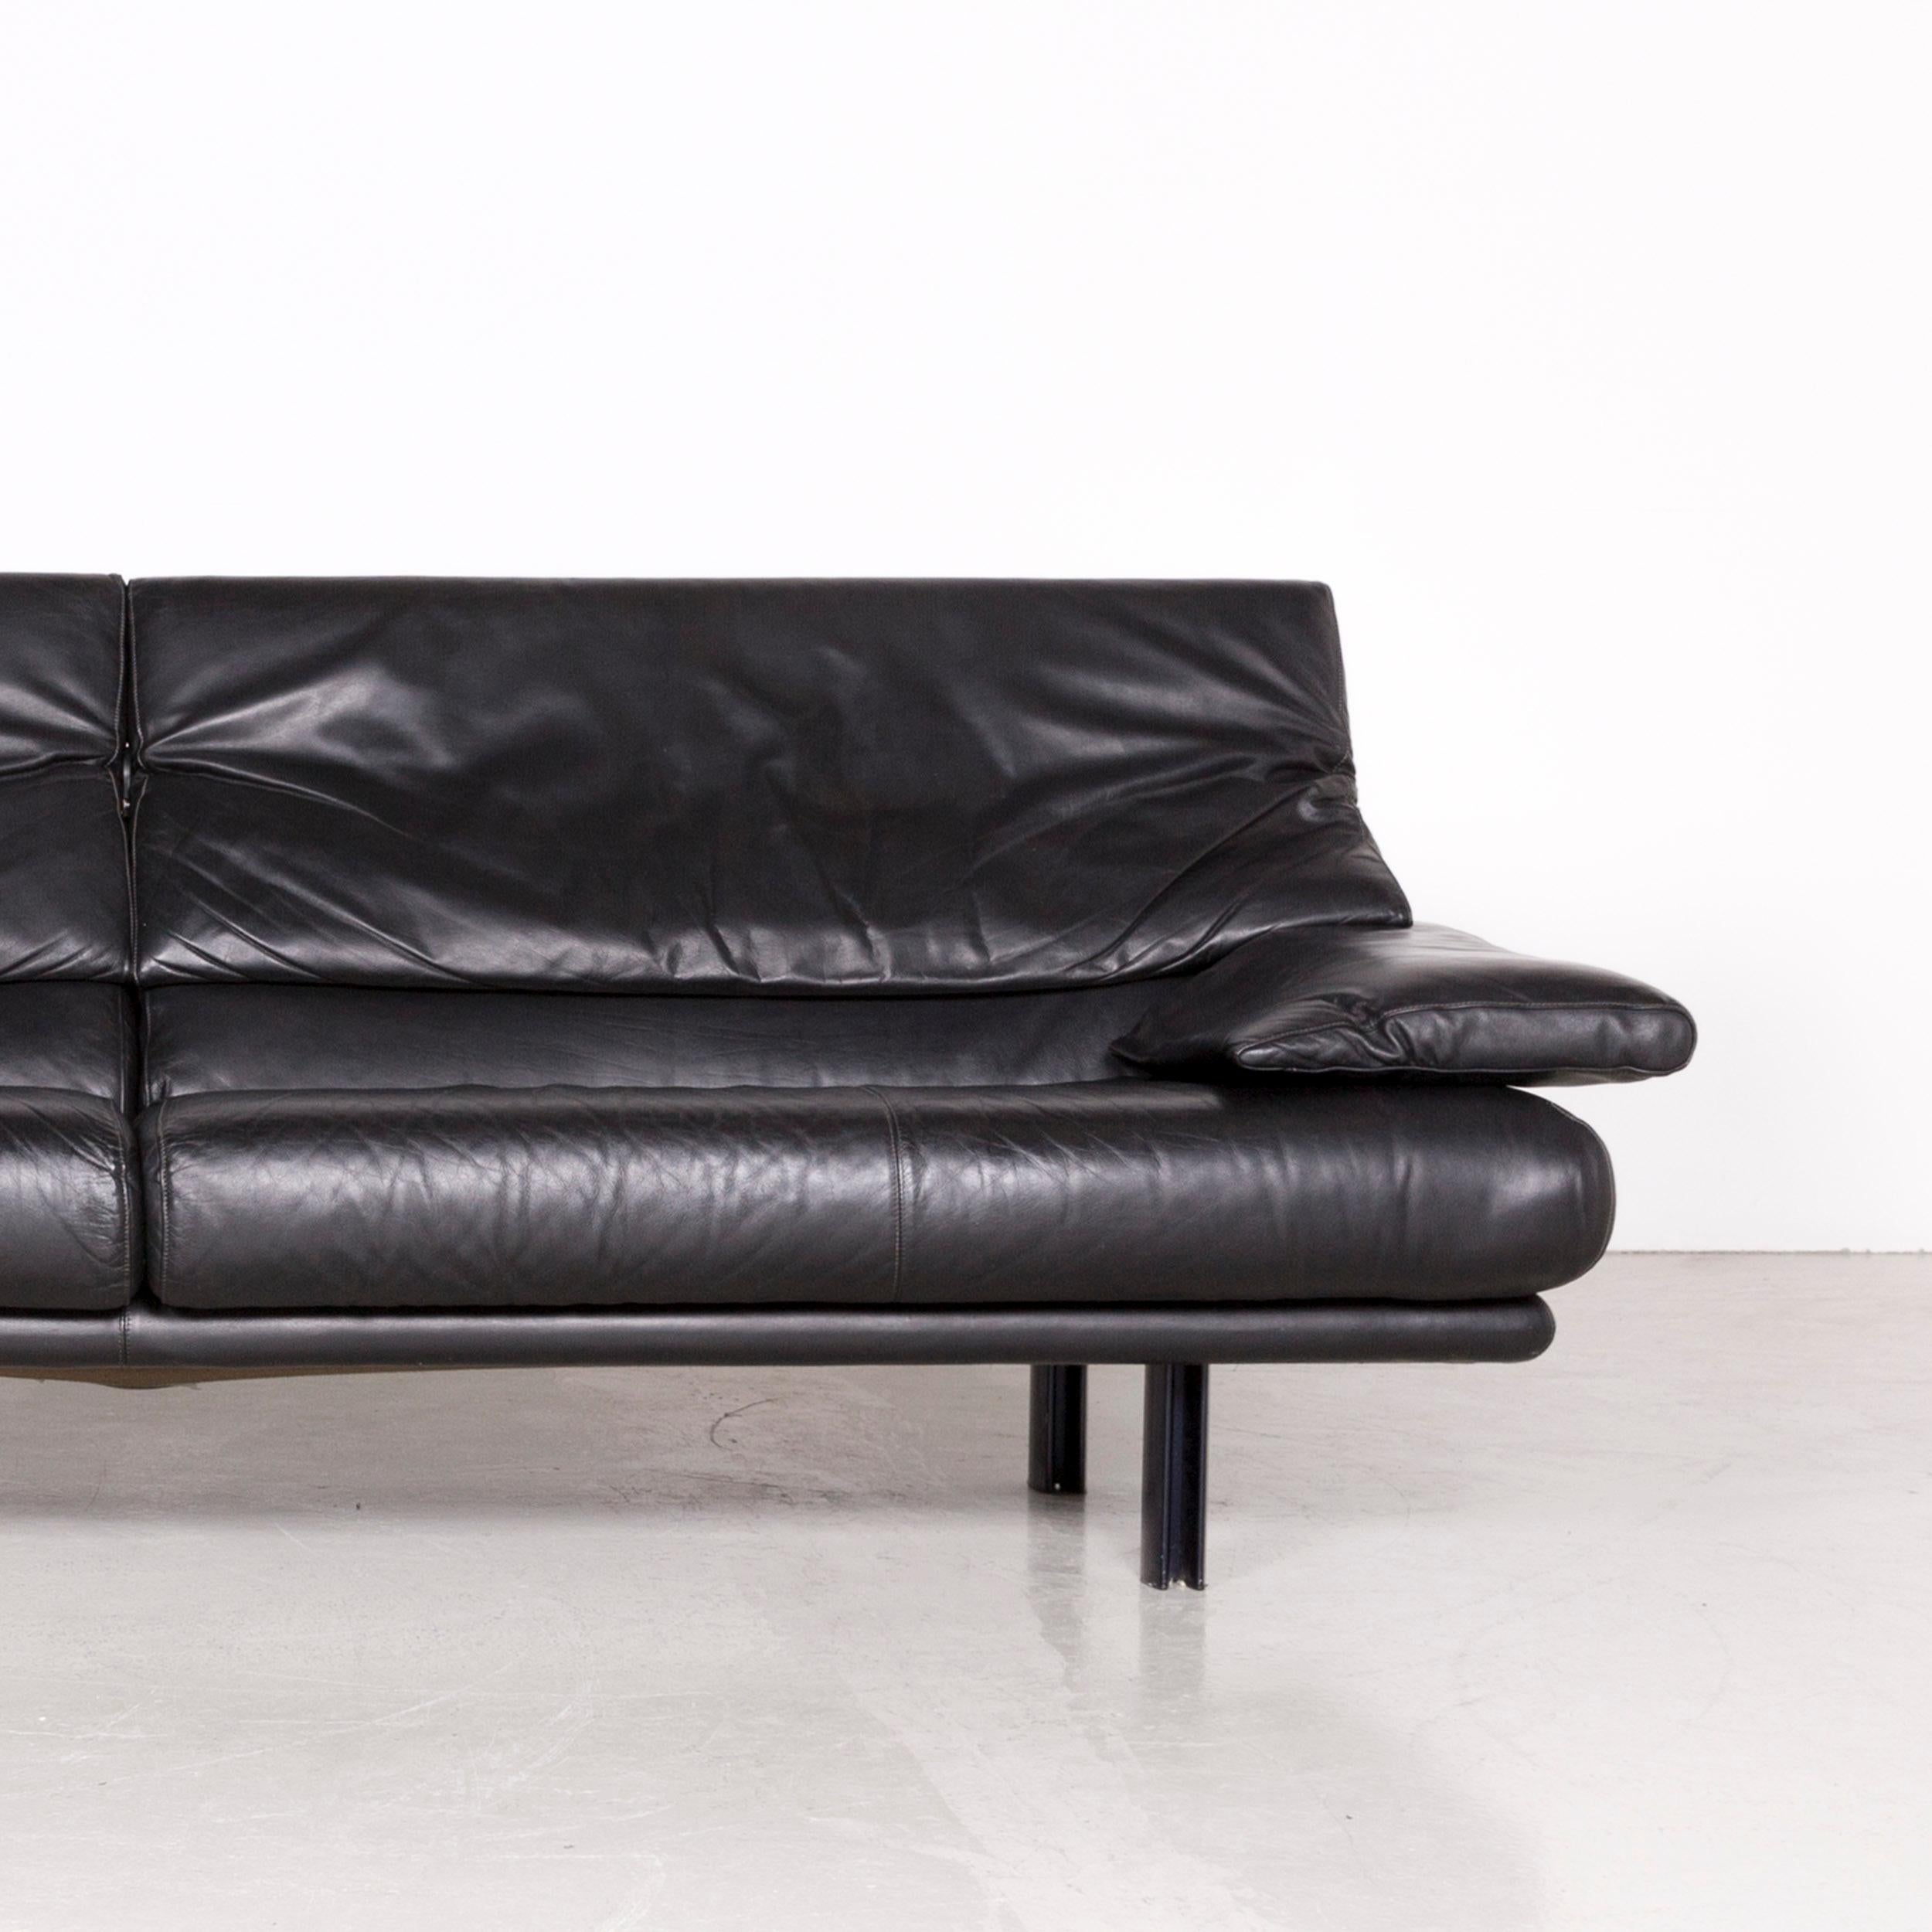 Contemporary B&B Italia Alanda Designer Leather Sofa Black Three-Seat Couch Relax For Sale